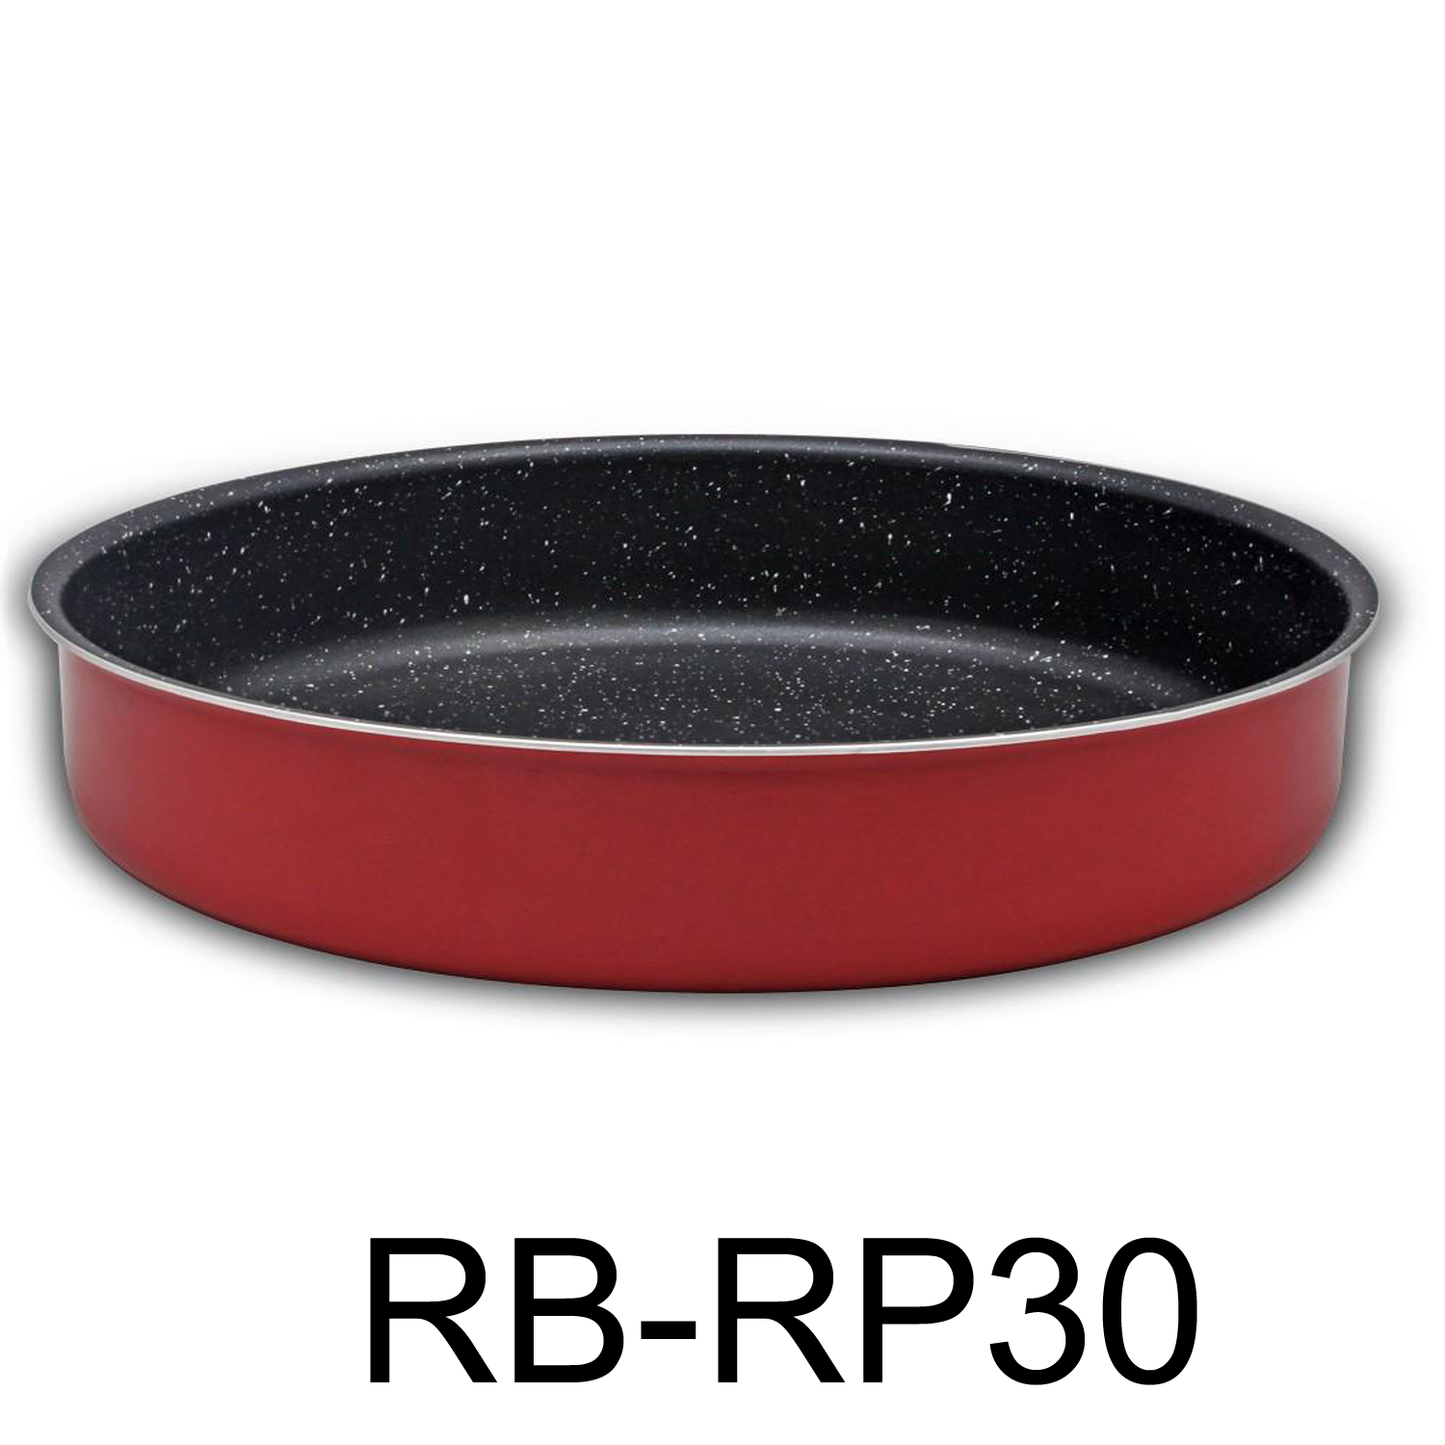 30cm Red & Black Marble Coating Baking Tray